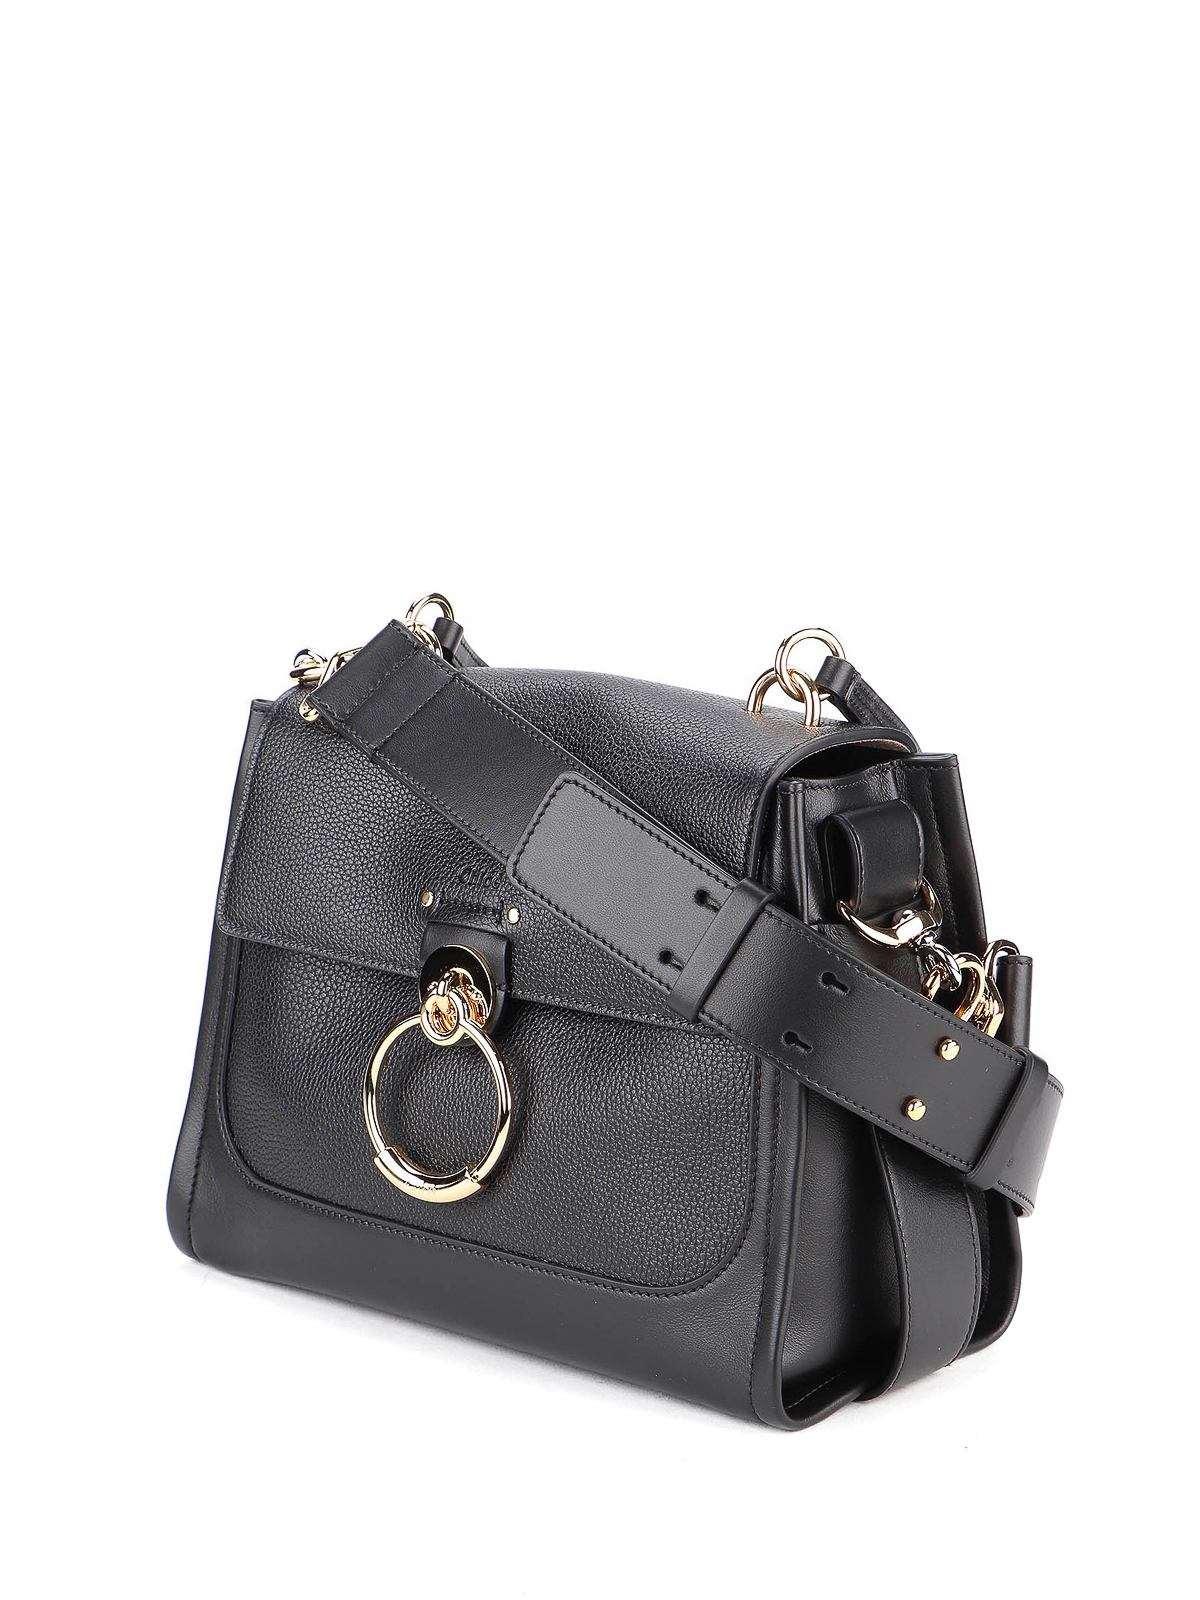 CHLOE Mini Tess Brown Leather Bag | eBay